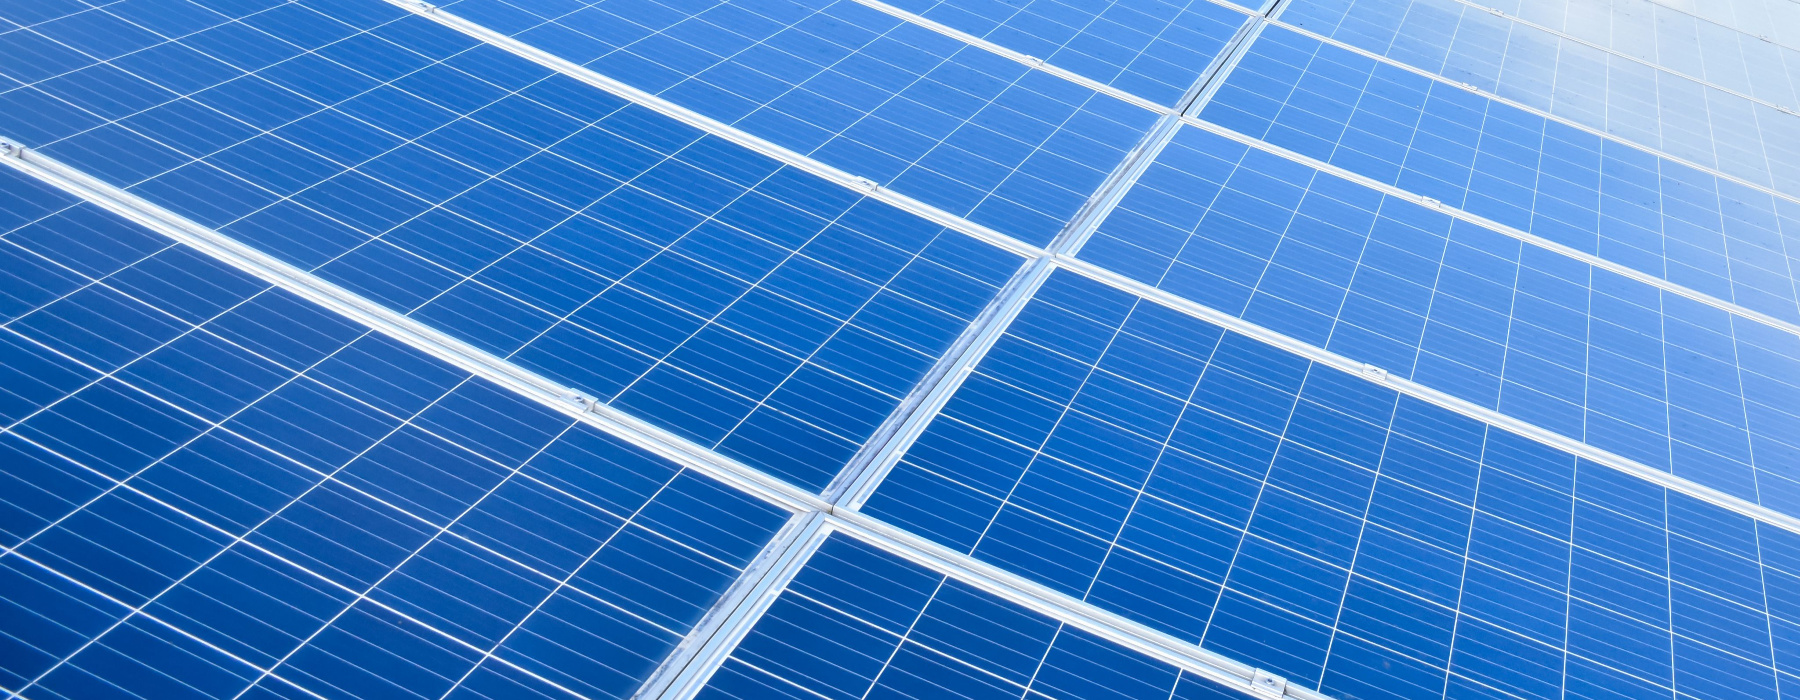 3 Ways Solar Panels Help Buildings Save on Power Bills in Summer